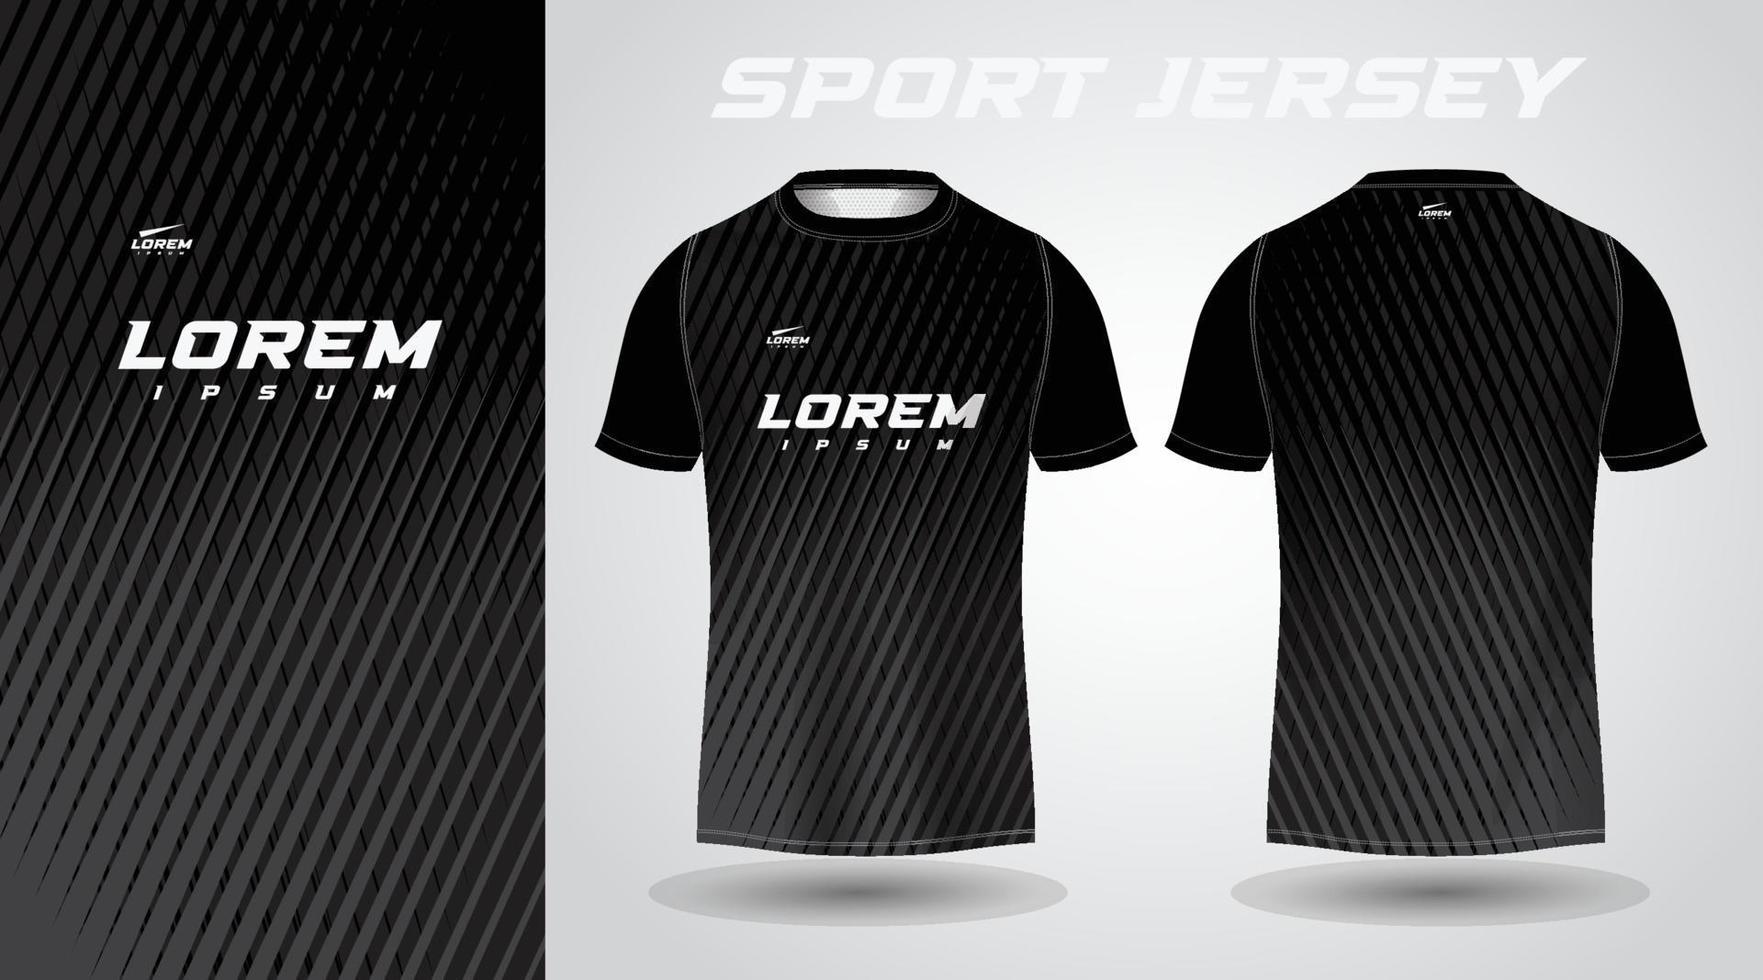 diseño de jersey deportivo de camiseta negra vector